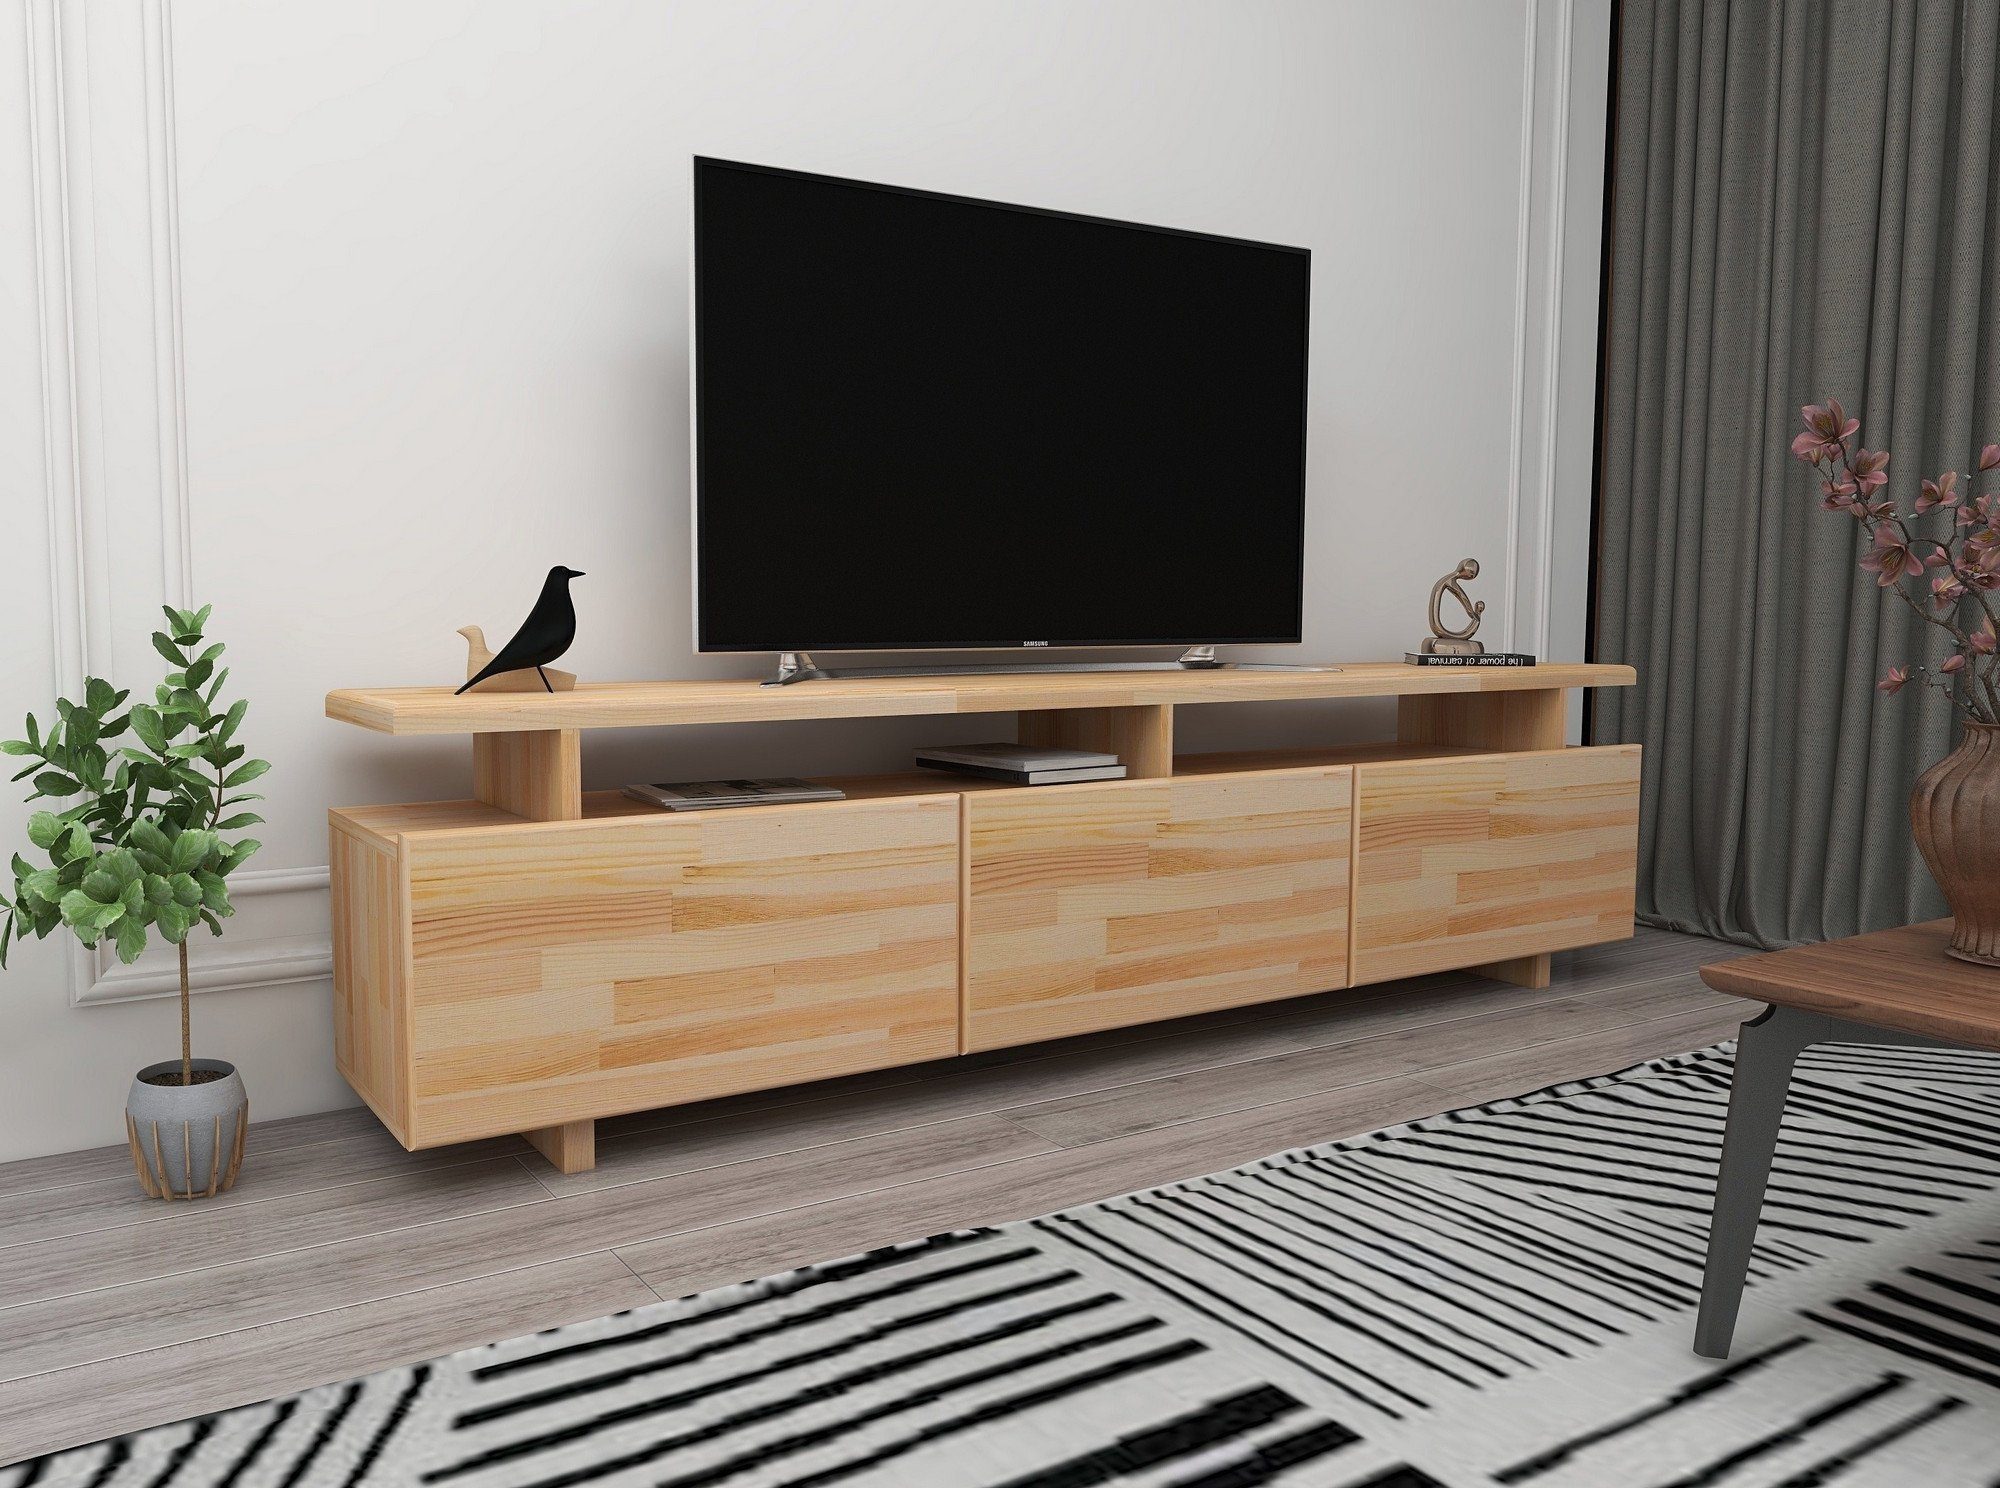 Skye Decor TV-Schrank Schränke, 52x174x30 cm, 100% Kiefer Massivholz